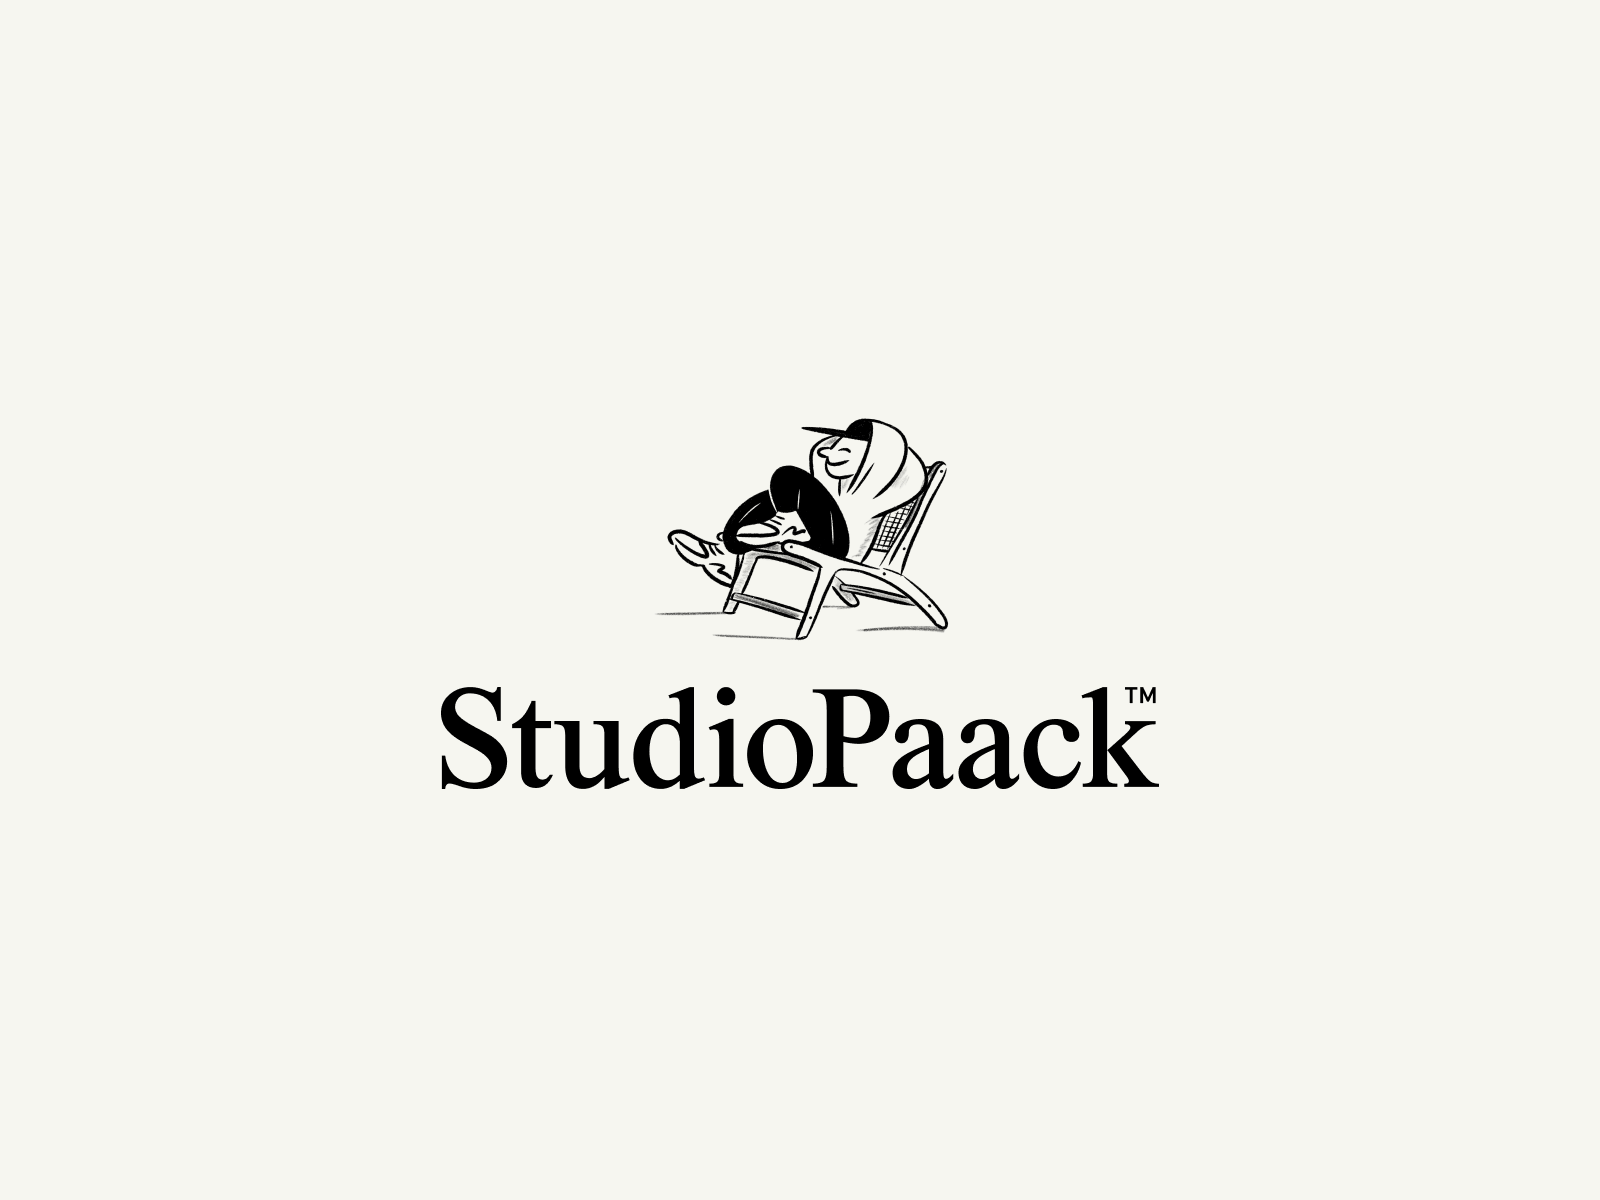 StudioPaack™